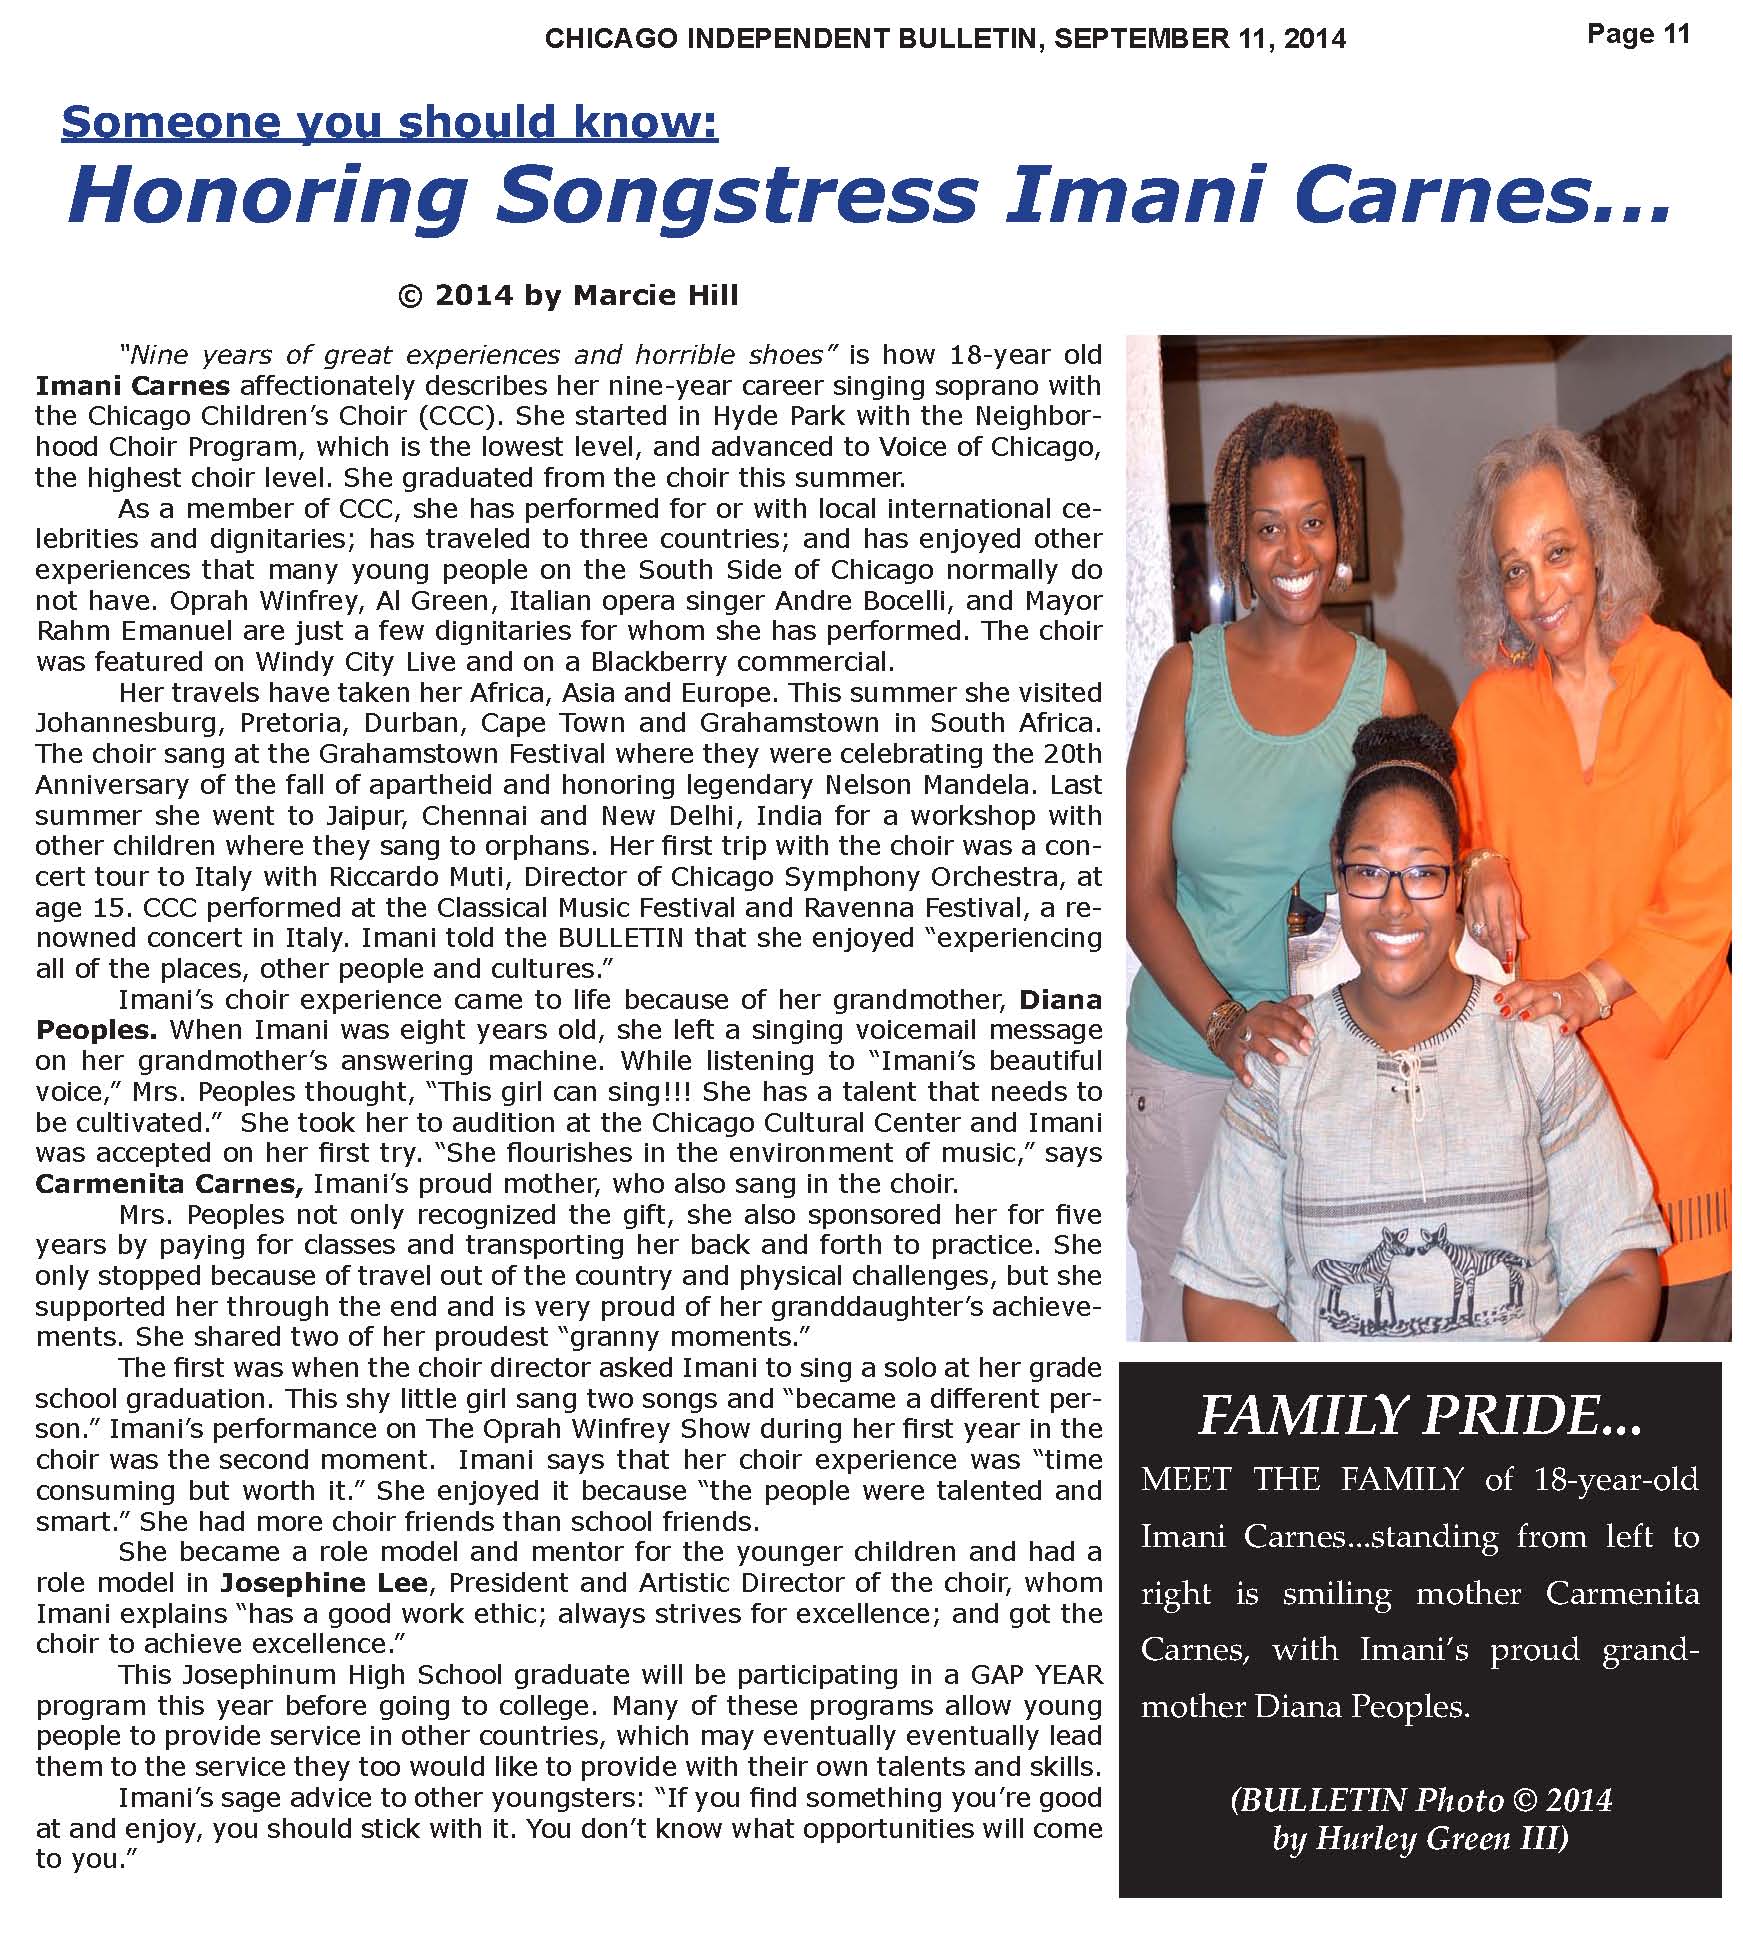 Honoring Imani Carnes - Independent Bulletin Newspaper